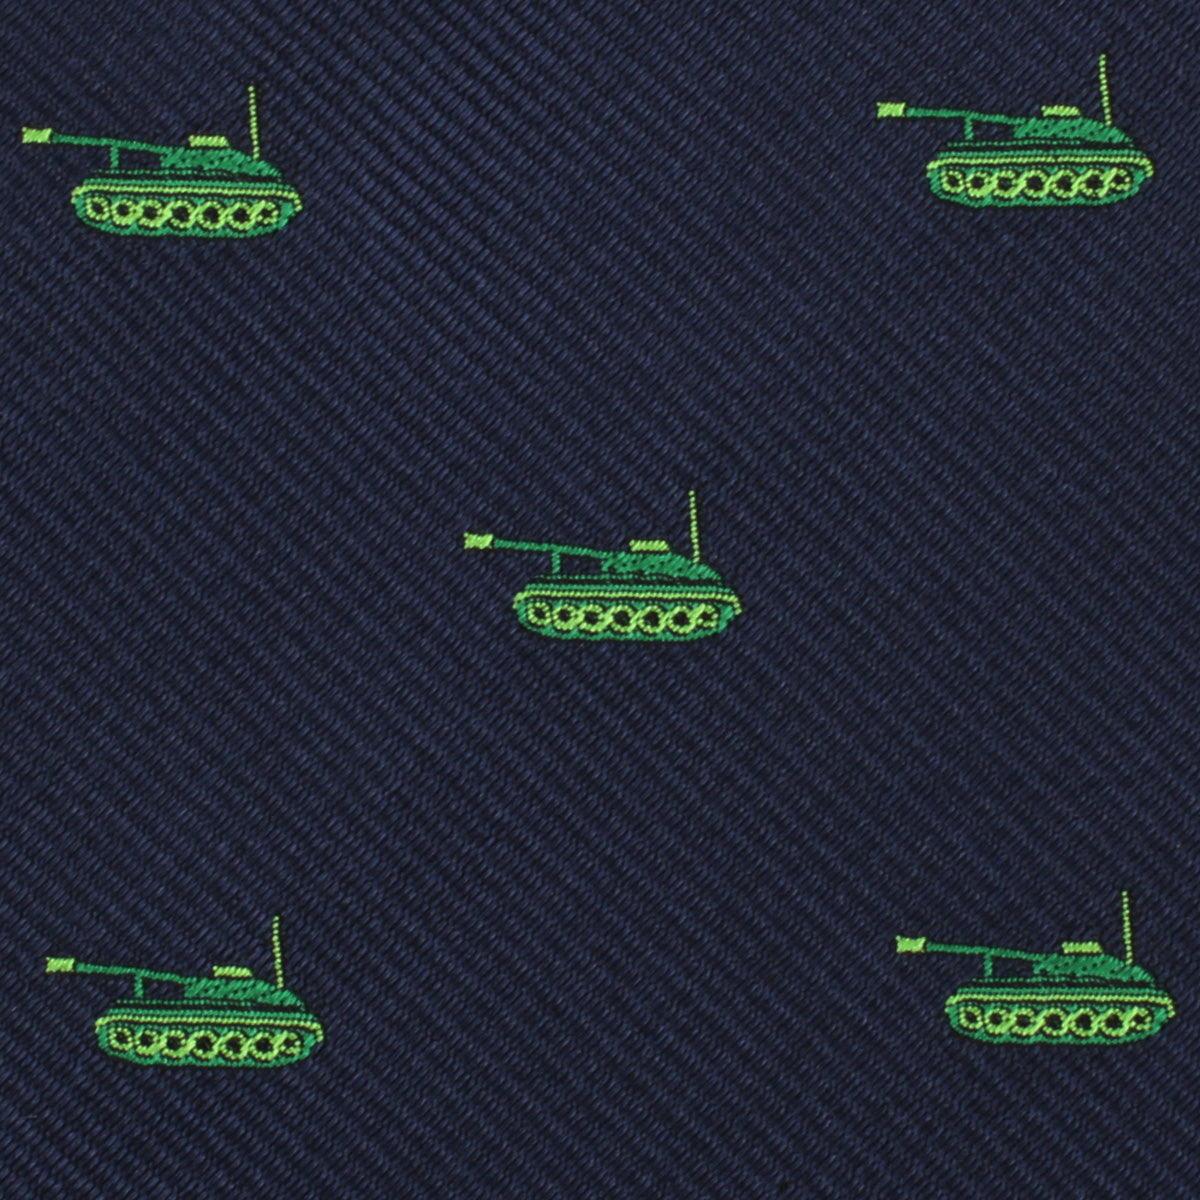 Green Army Tank Skinny Tie Fabric